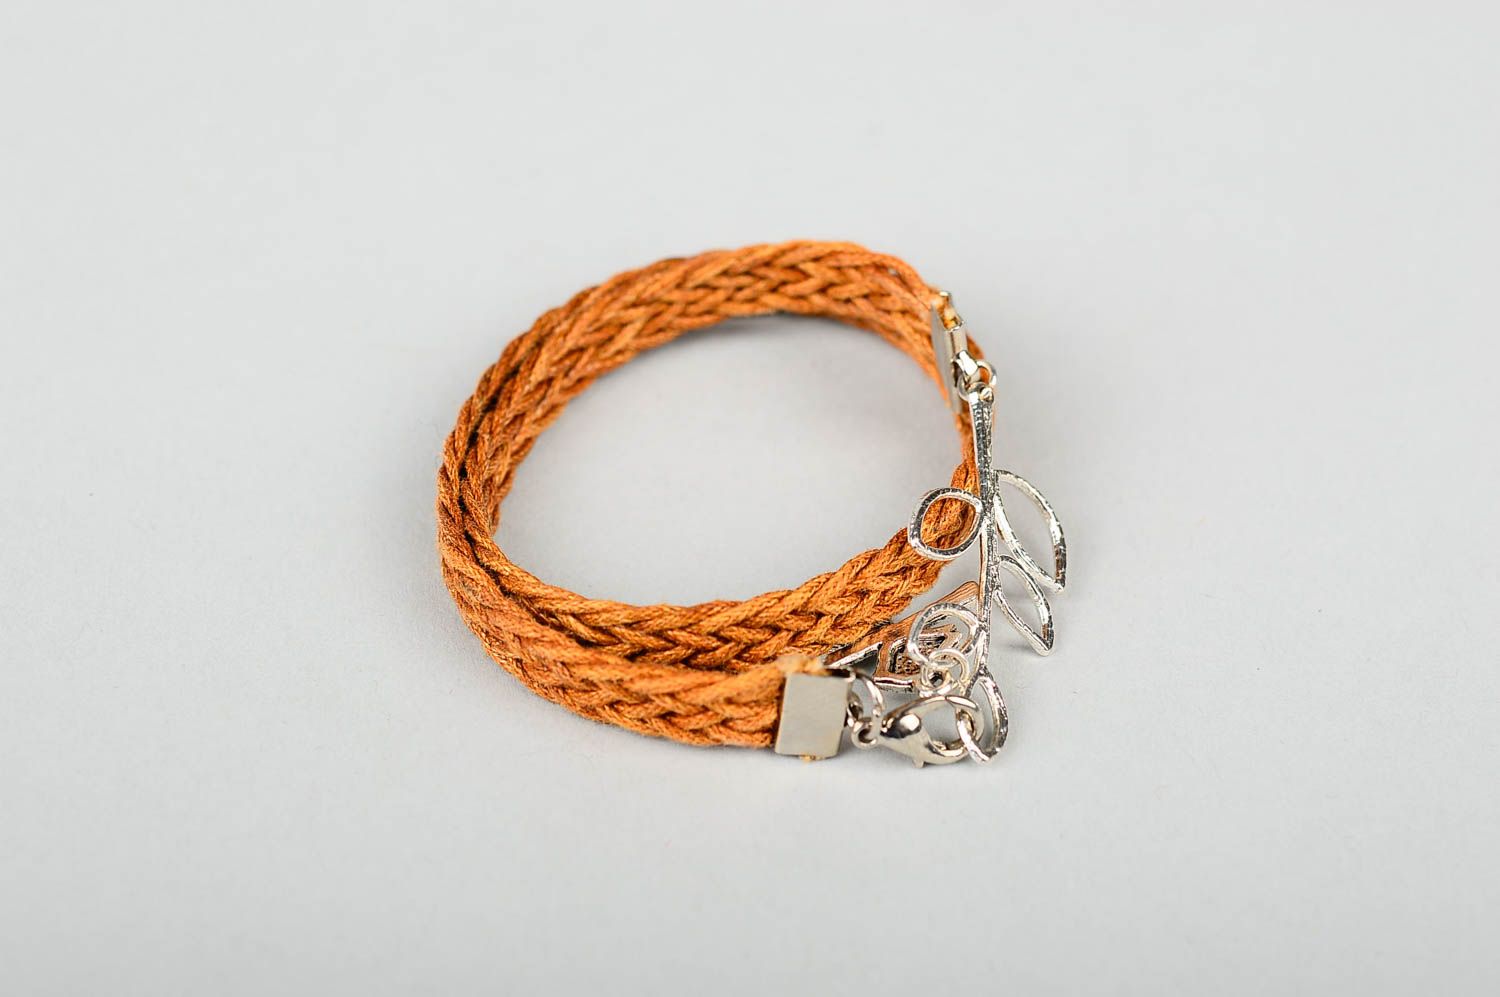 Stylish handmade leather bracelet double wrap bracelet designs gifts for her photo 1